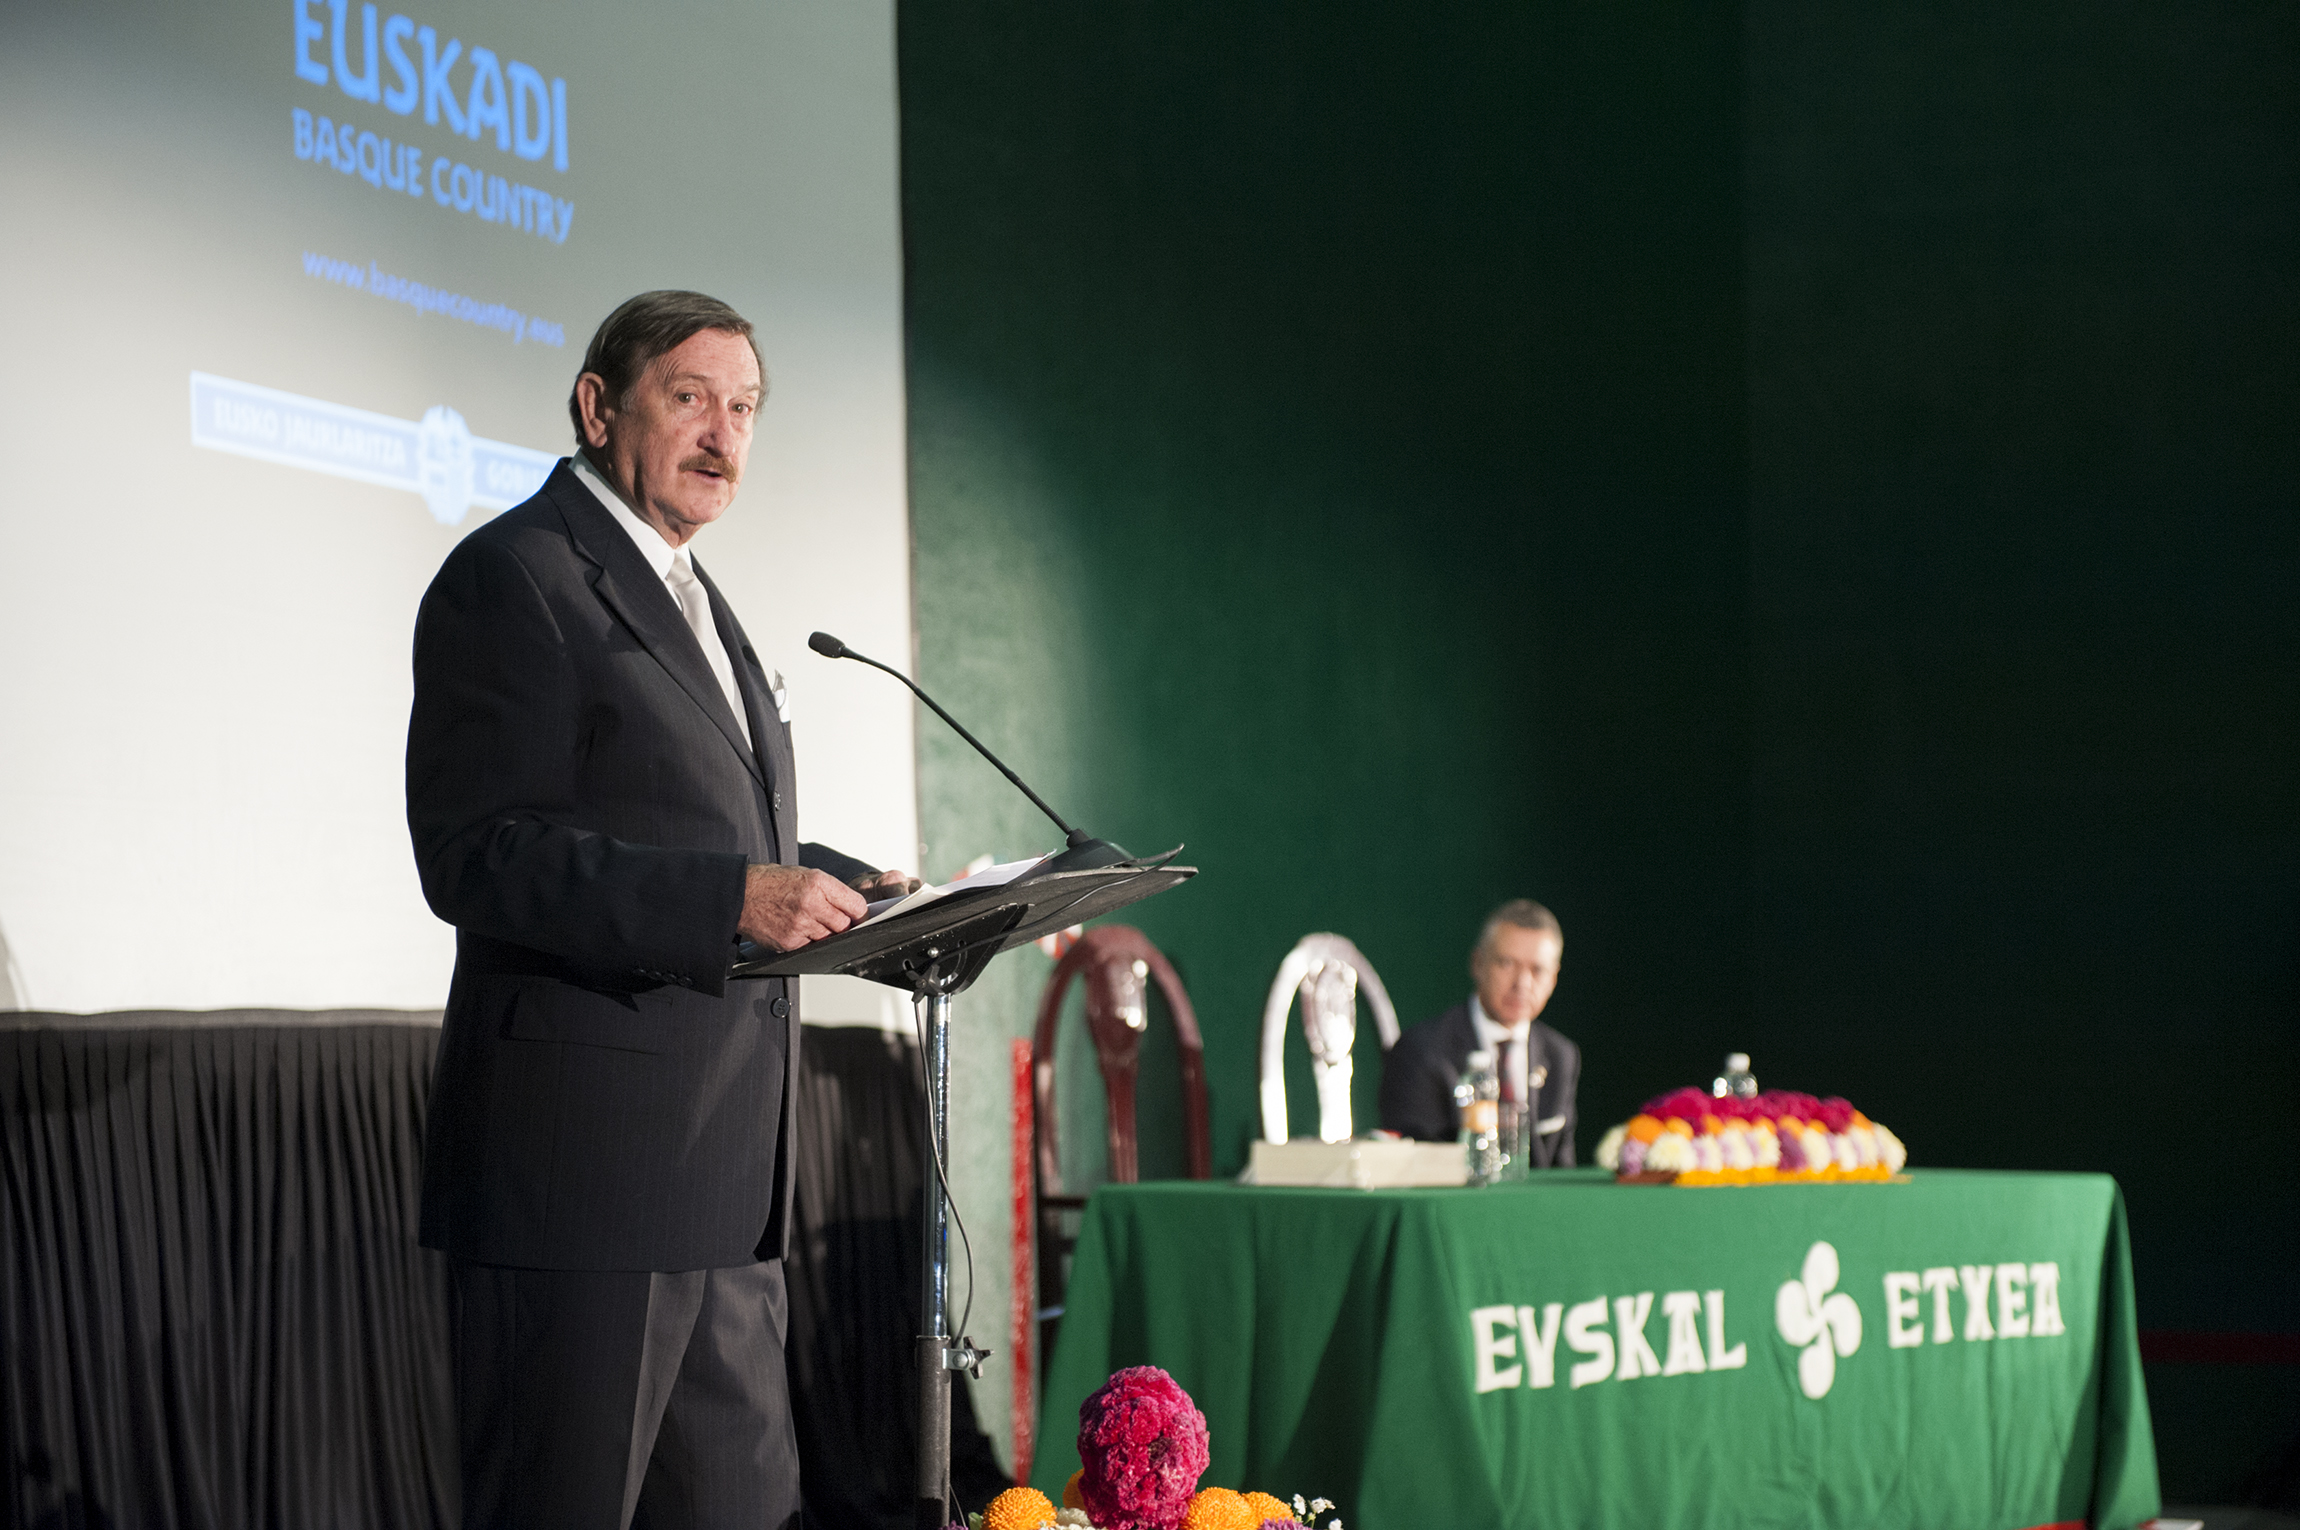 man in business suit speaking at podium during event